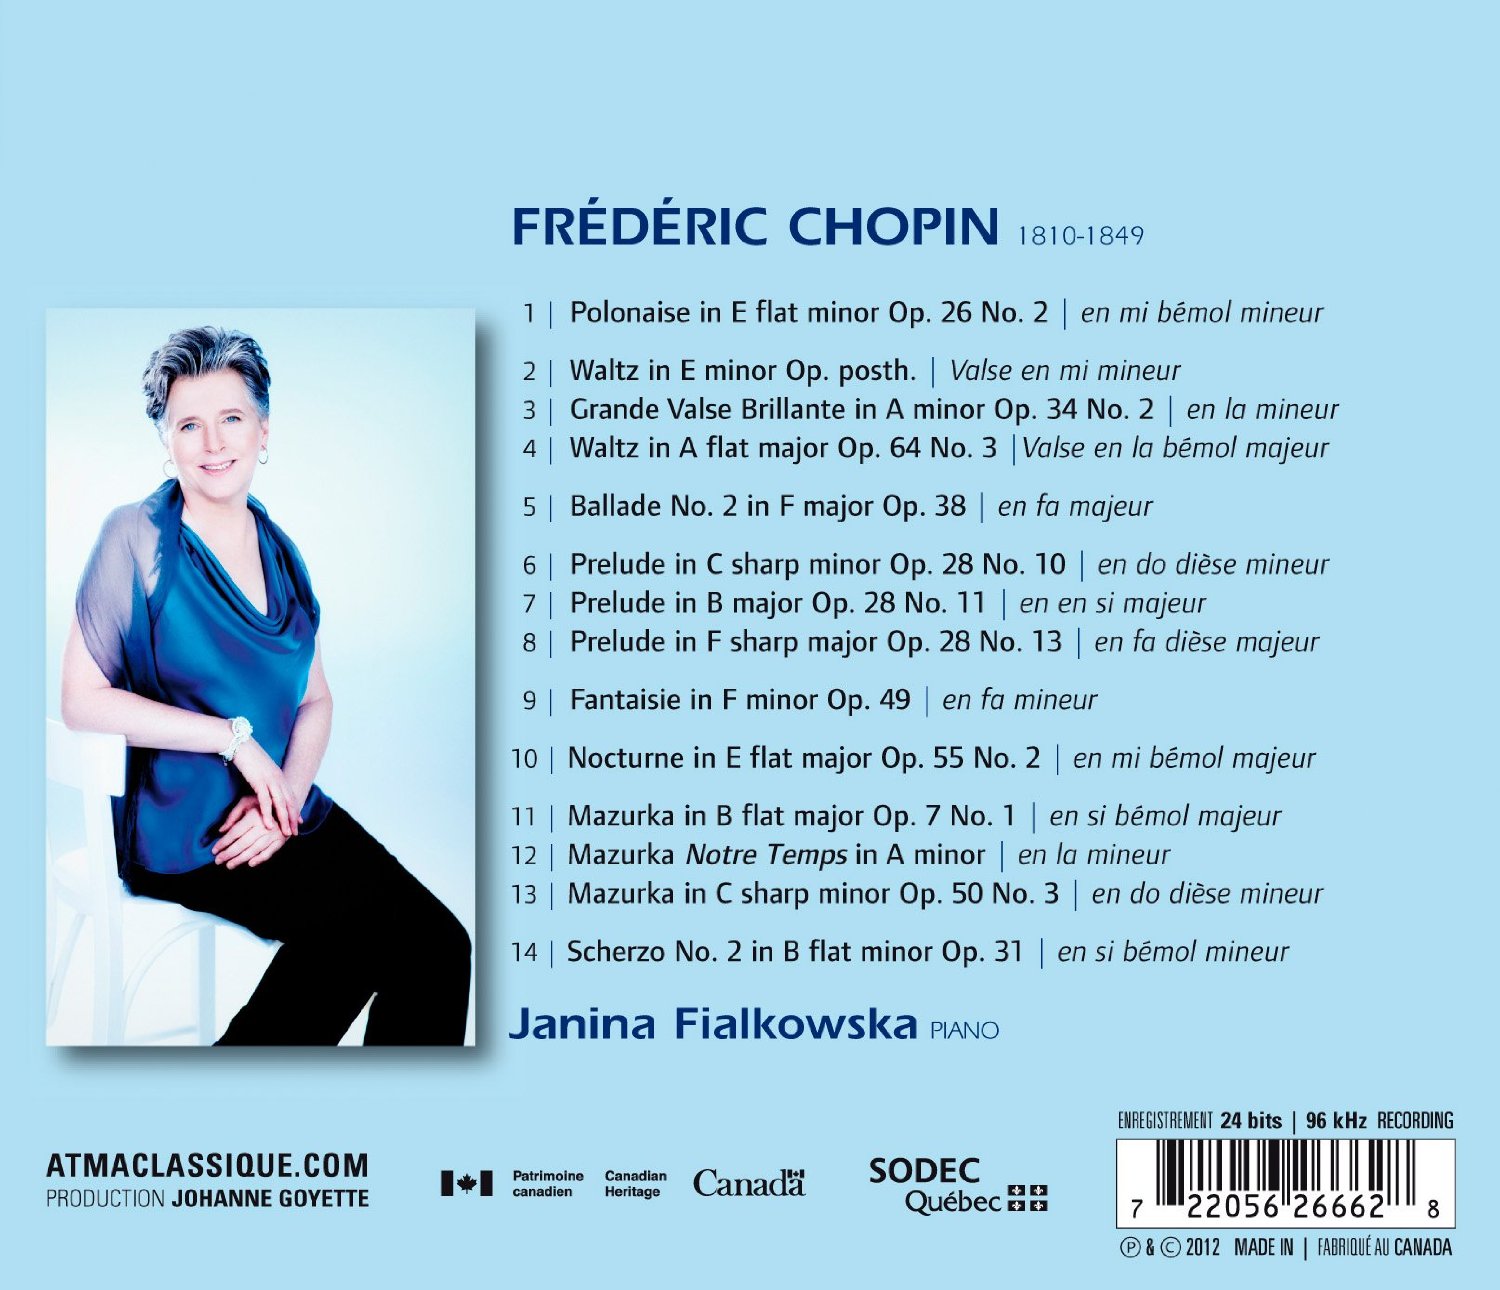 Pianist Janina Fialkowska, Chopin Recital 2 on the Atma label